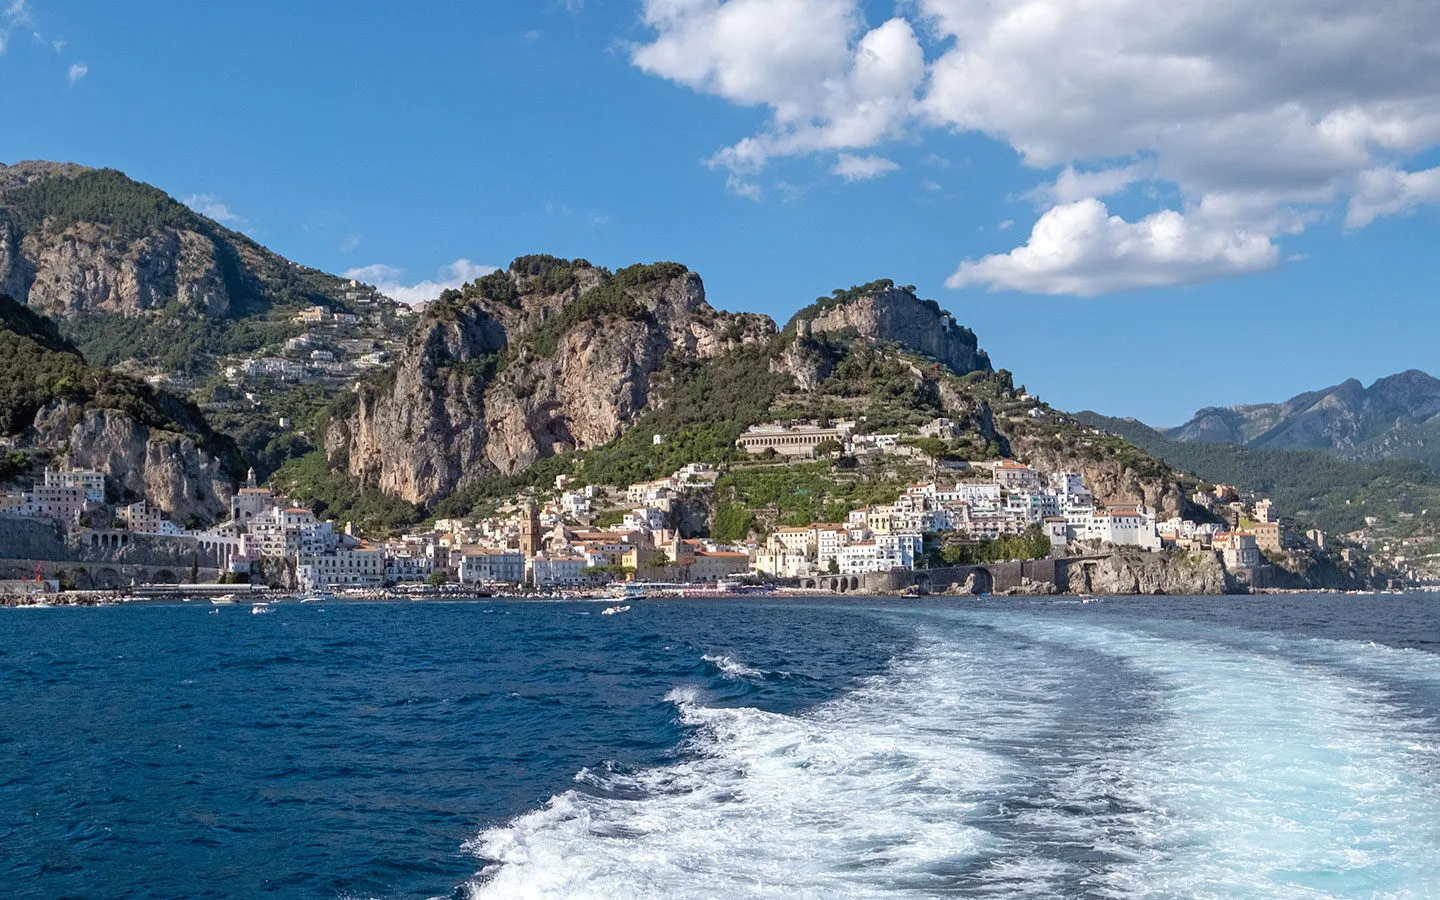 Sailing out of Amalfi